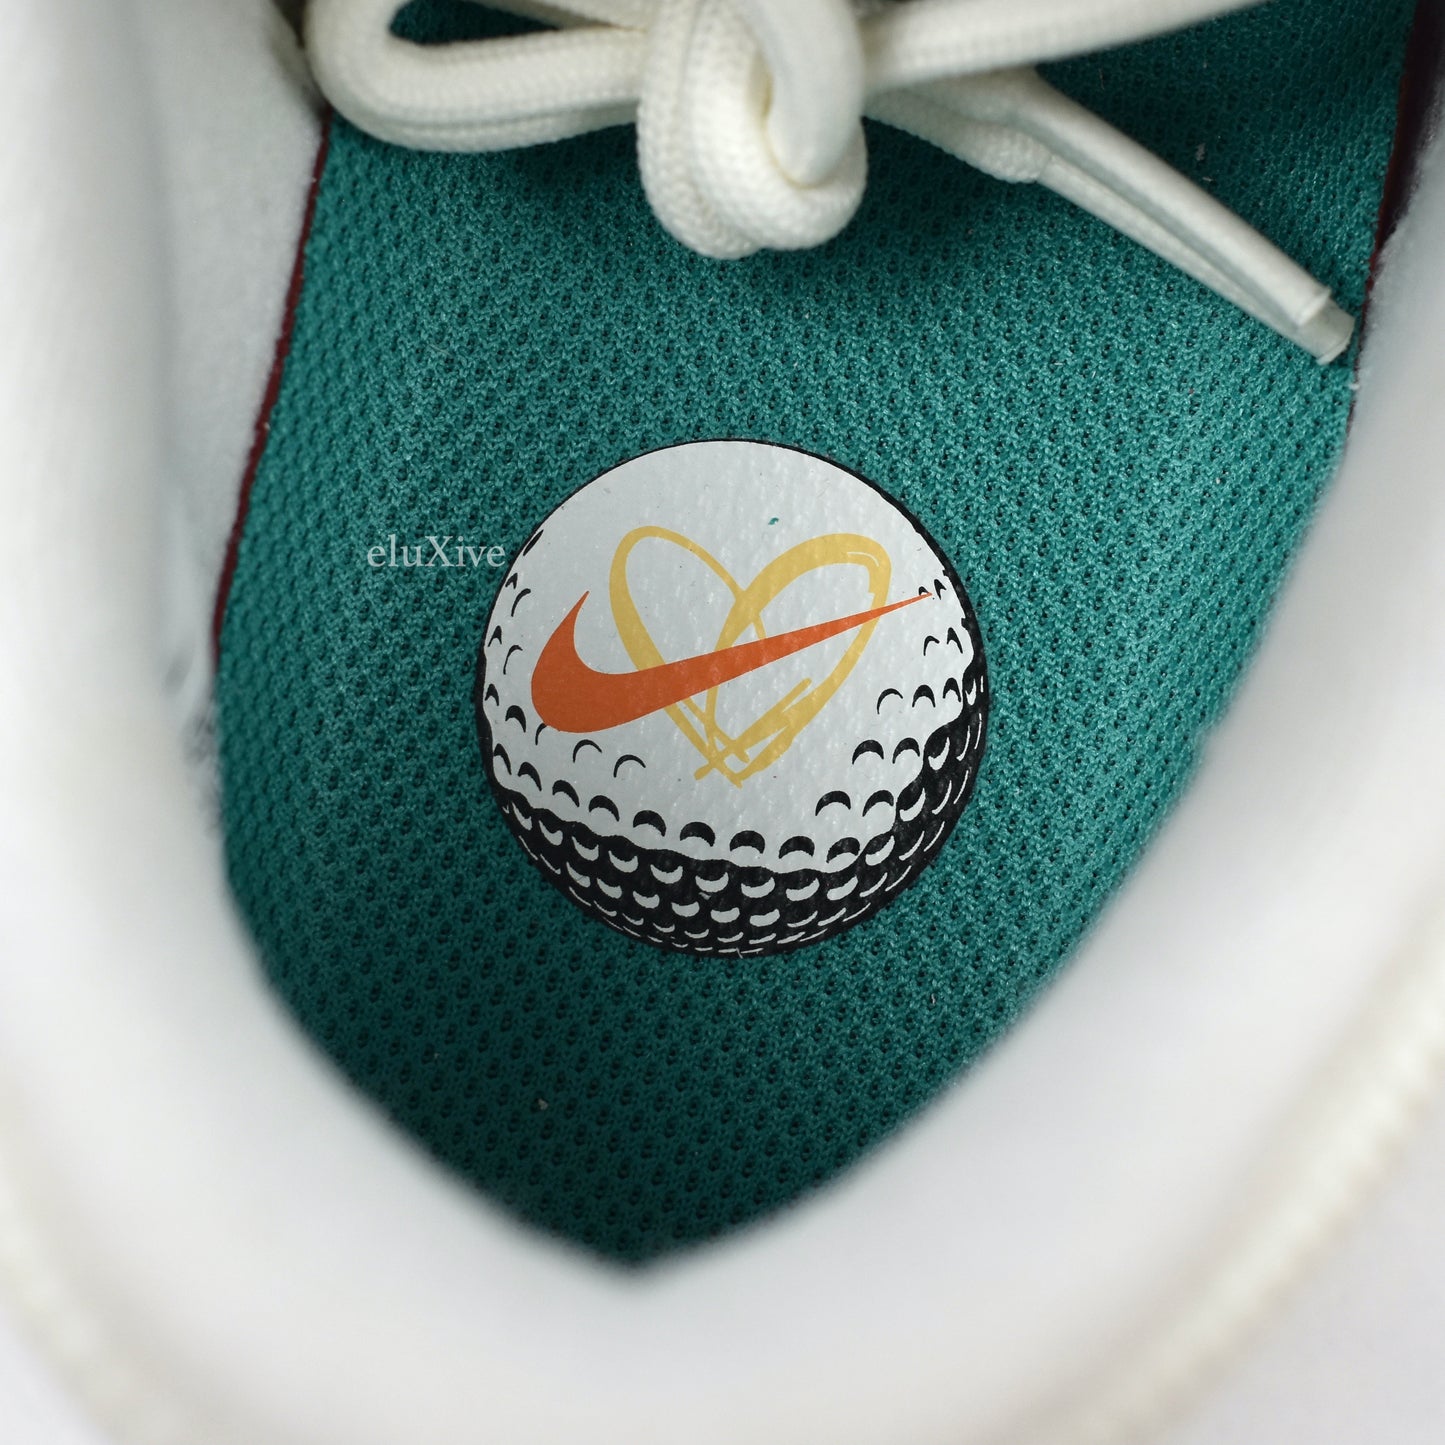 Nike - Air Max 97 G NRG M Golf 'Corduroy' (Celestial Gold)